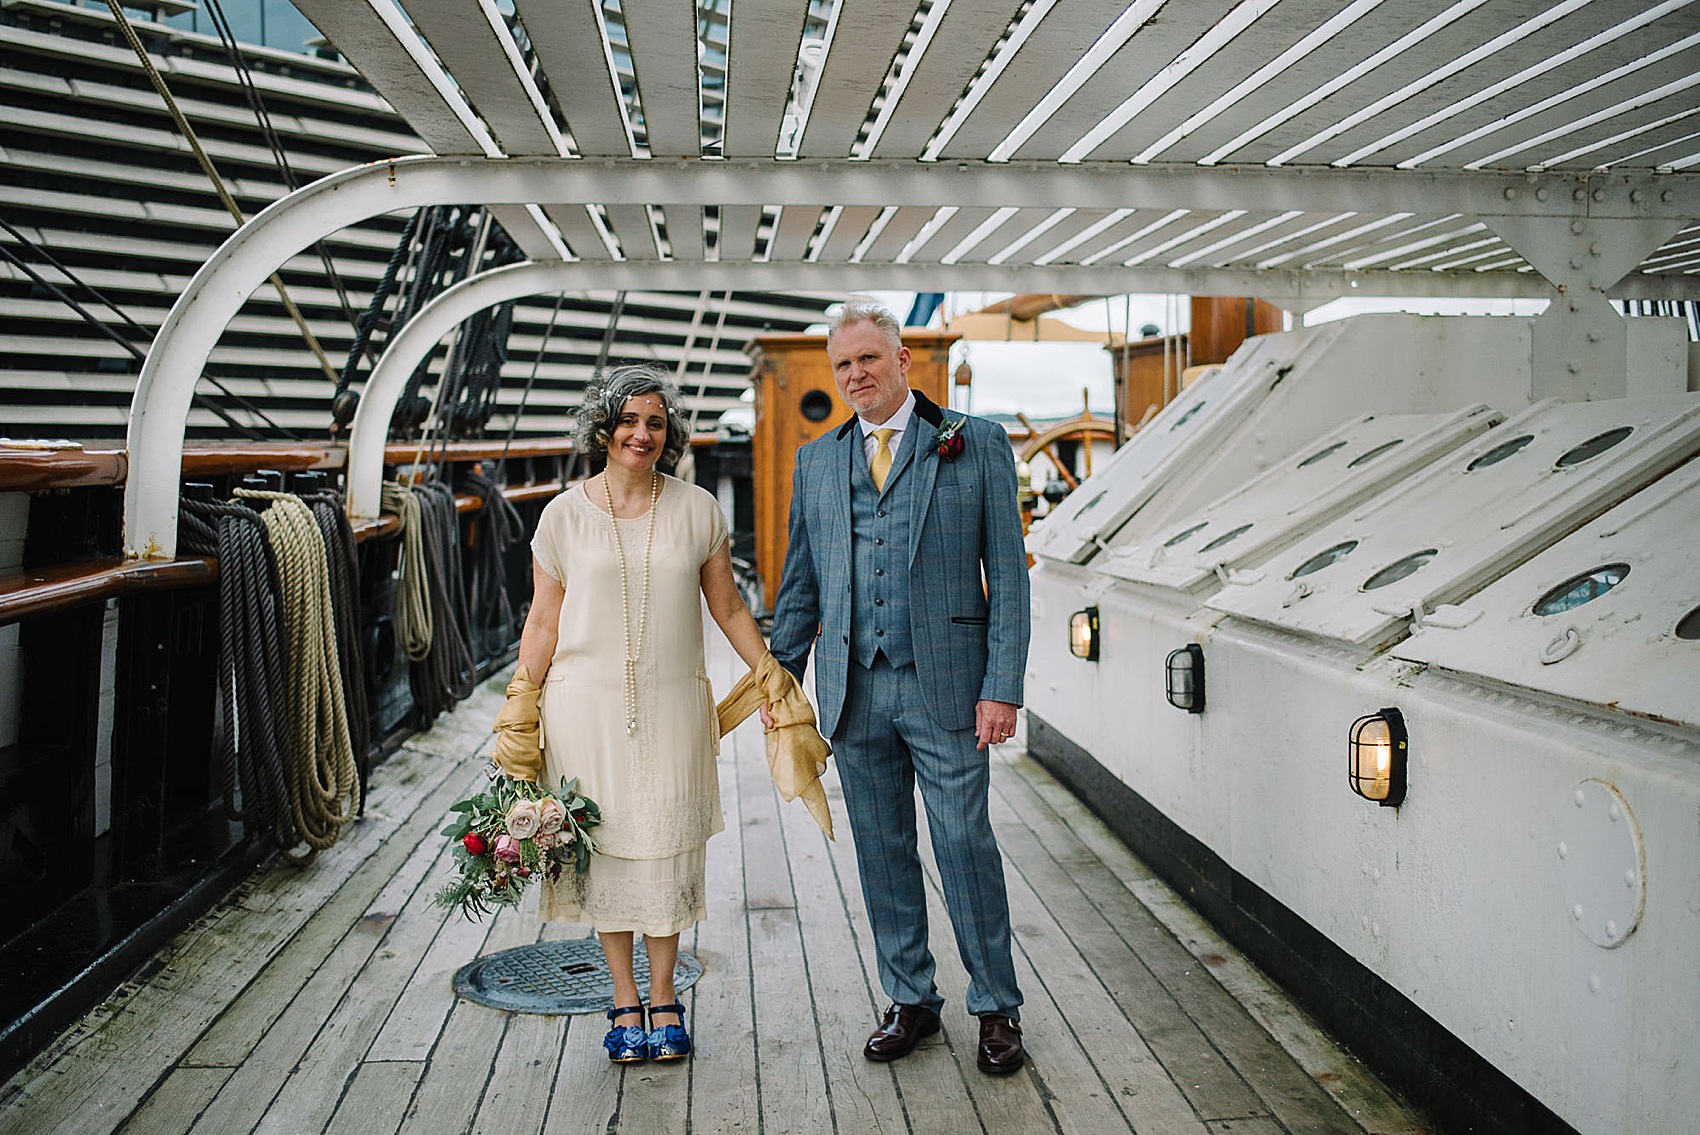 Wedding on a boat 1920s vintage dress 42